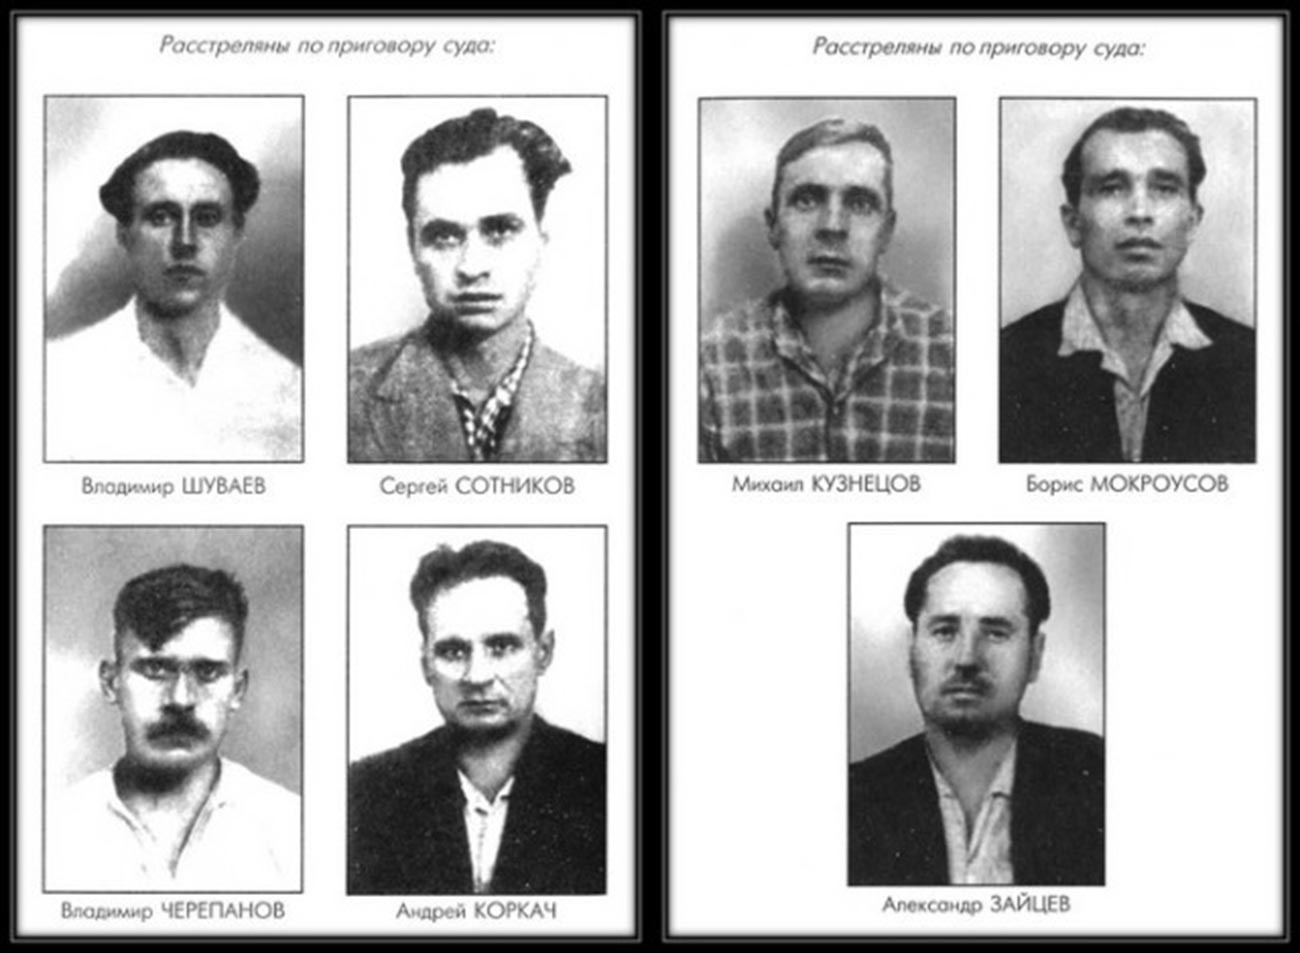 I sette lavoratori della fabbrica condannati a morte per fucilazione: Vladimir Shuvaev (1937-1962), Sergej Sotnikov (1937-1962), Mikhail Kuznetsov (1930-1962), Boris Mokrousov (1923-1962), Vladimir Cherepanov (1933-1962), Andrej Korkach (1917-1962), Aleksandr Zaytsev (1927-1962)